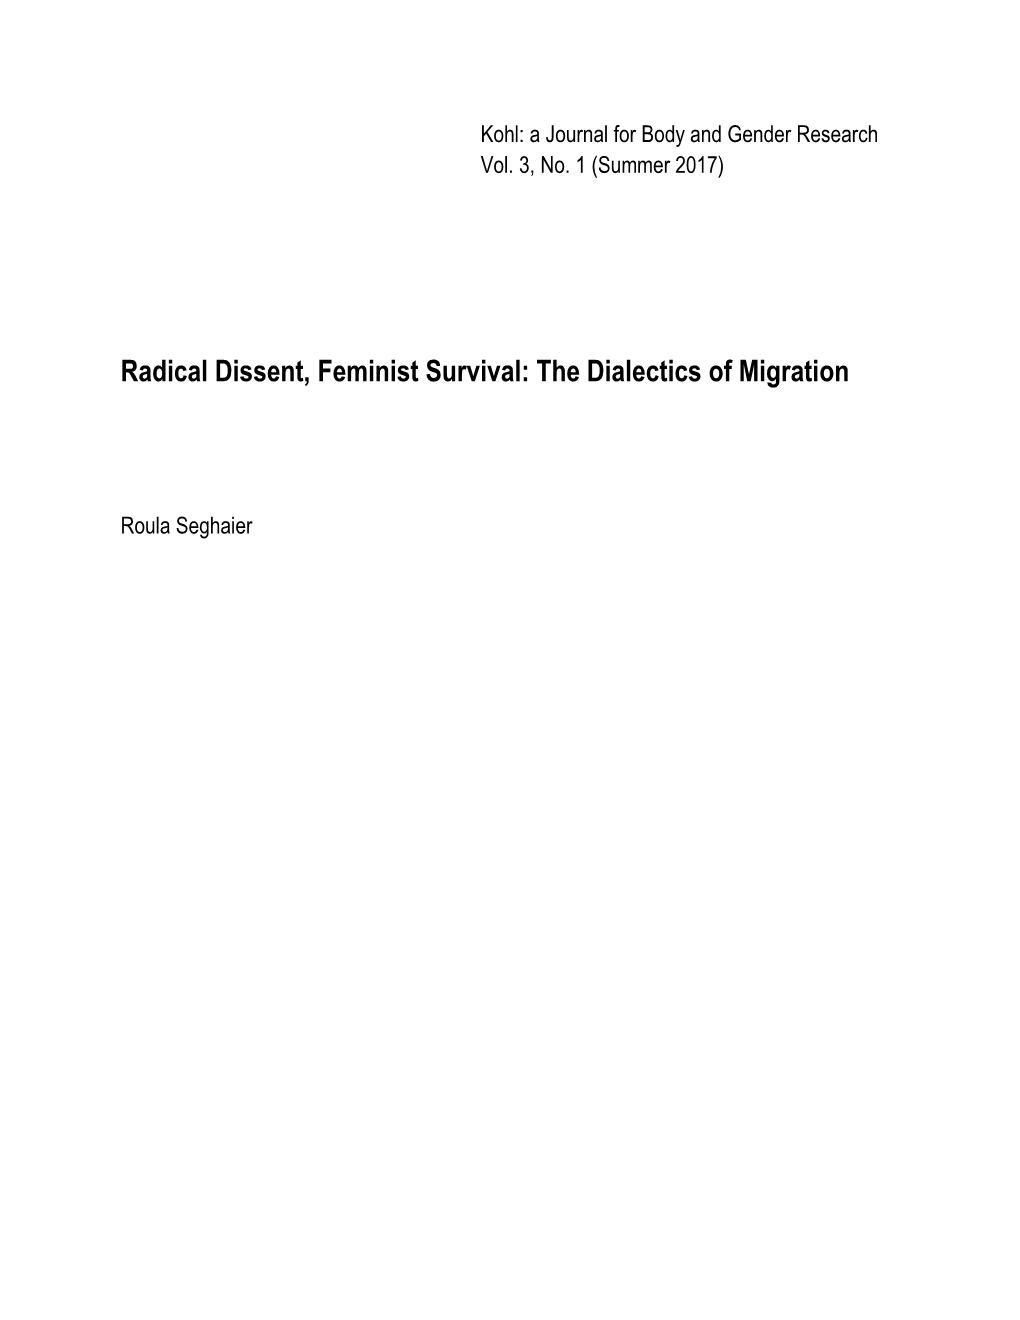 Radical Dissent, Feminist Survival: the Dialectics of Migration